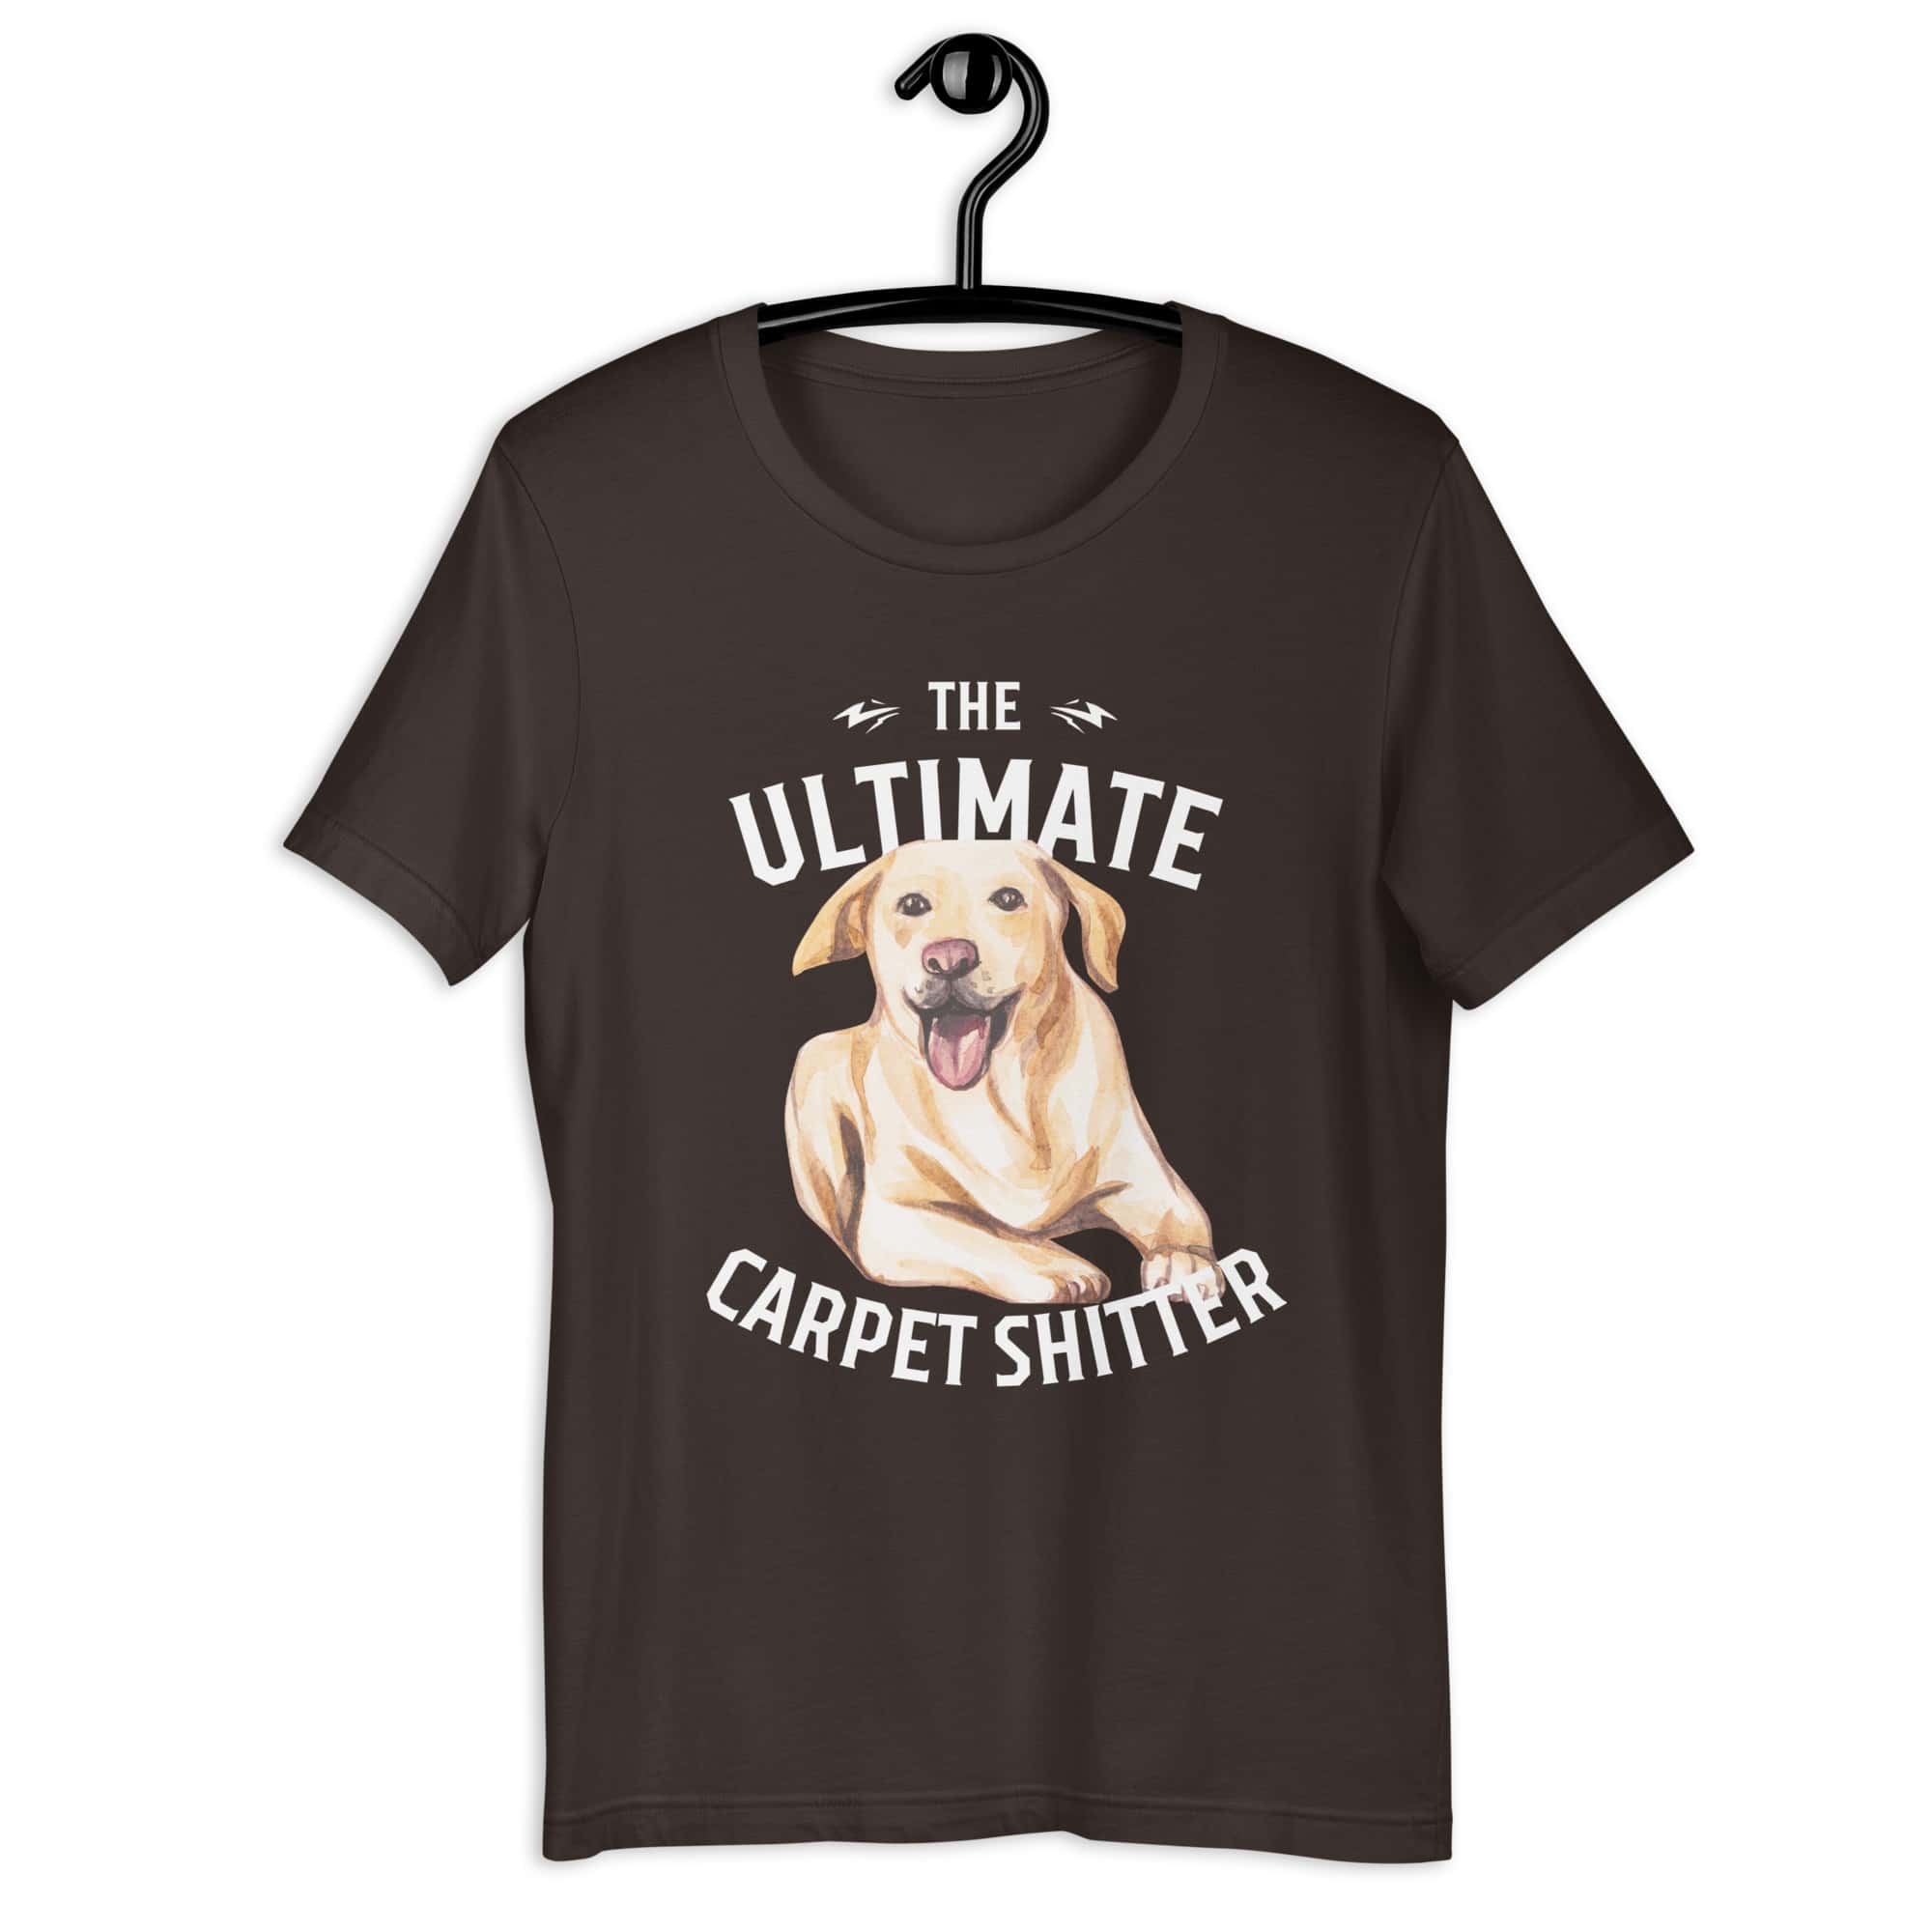 The Ultimate Carpet Shitter Funny Golden Retriever Unisex T-Shirt brown